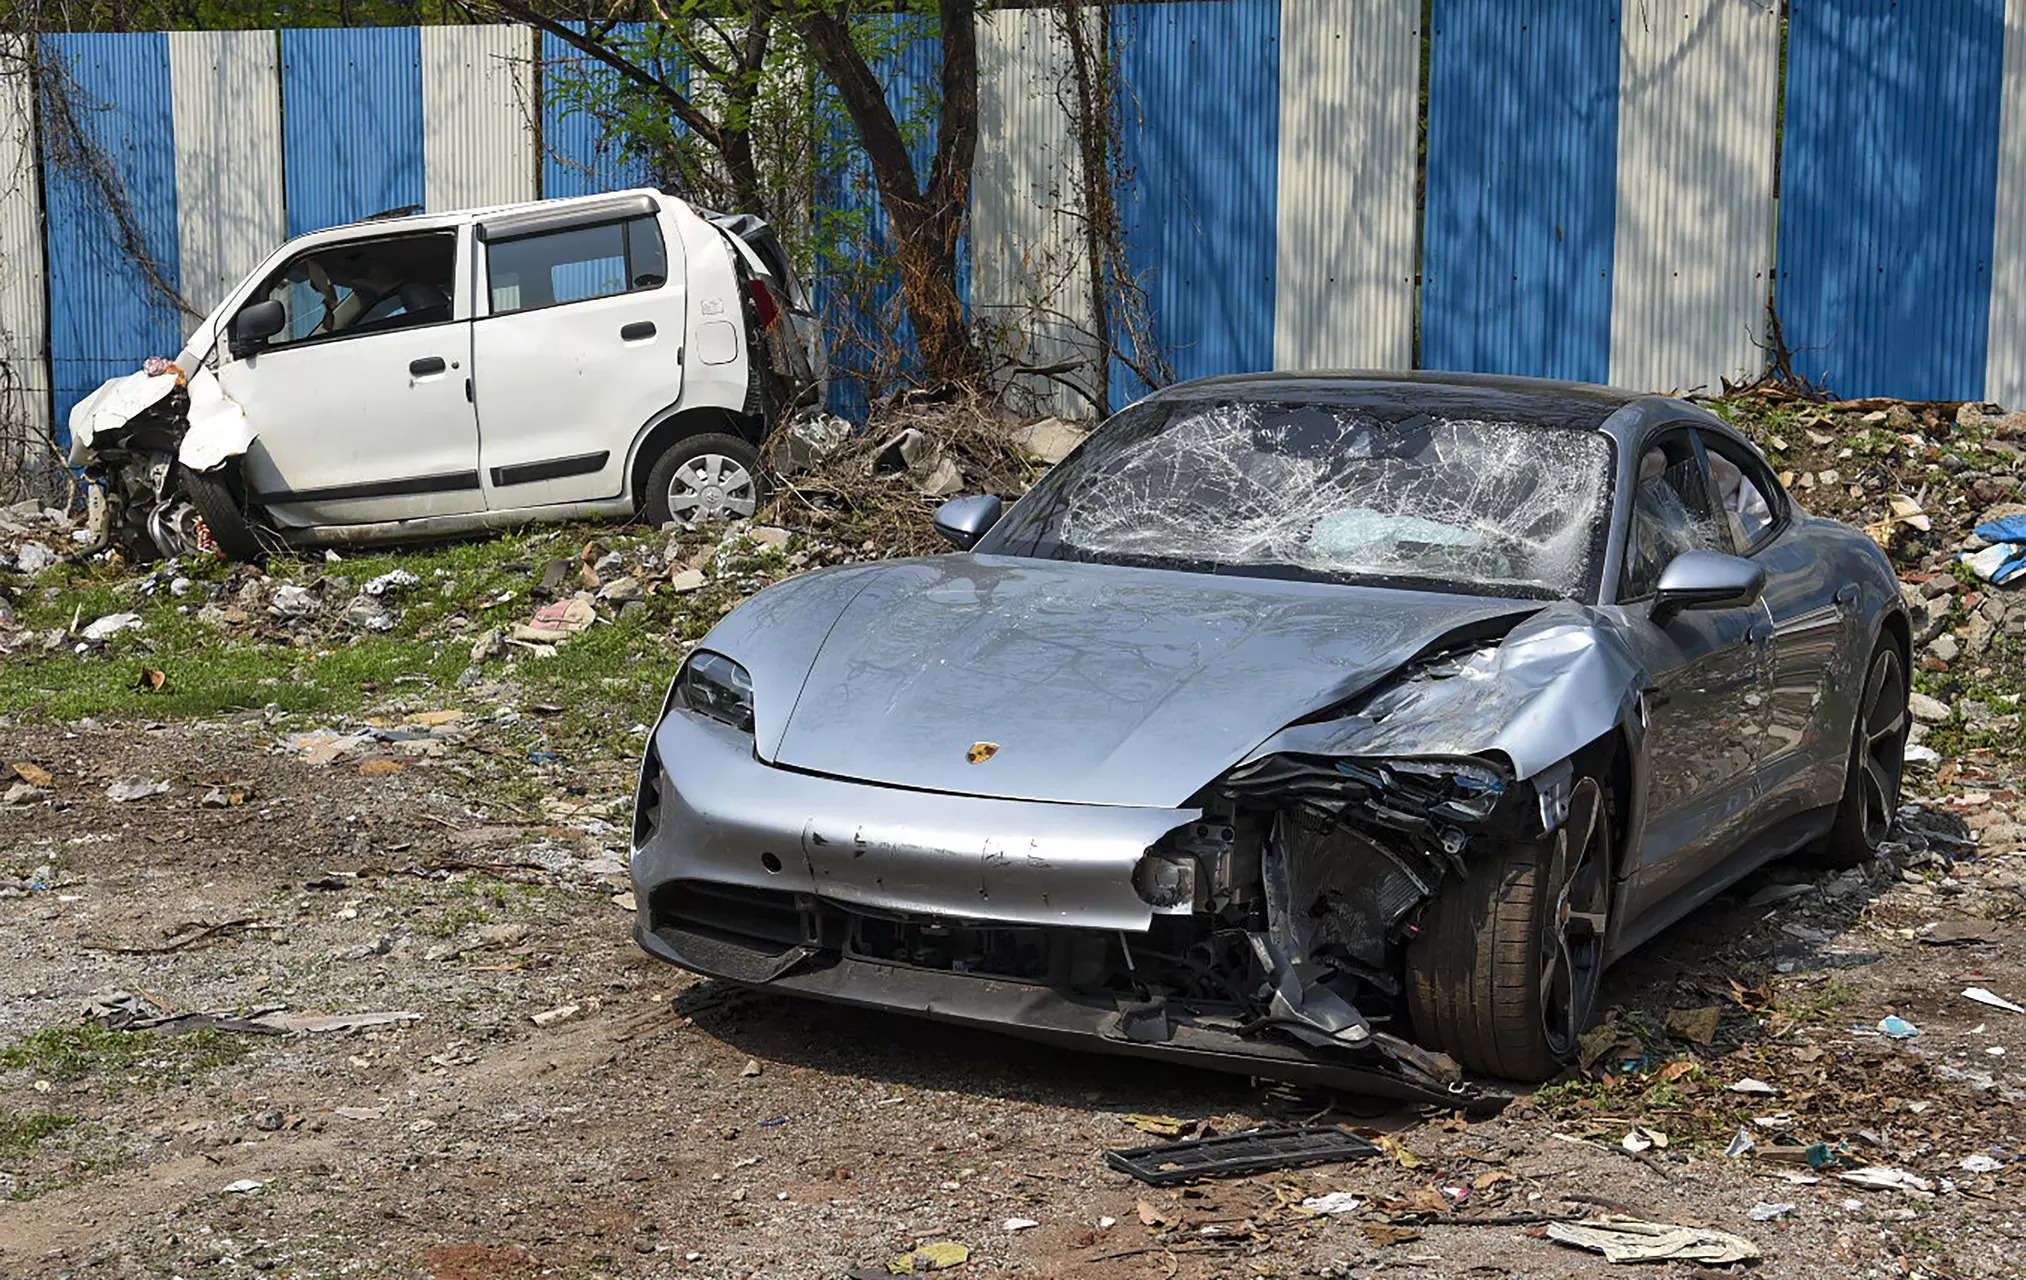 Pune Porsche crash: Juvenile's blood samples were replaced, investigation unveils tampering 